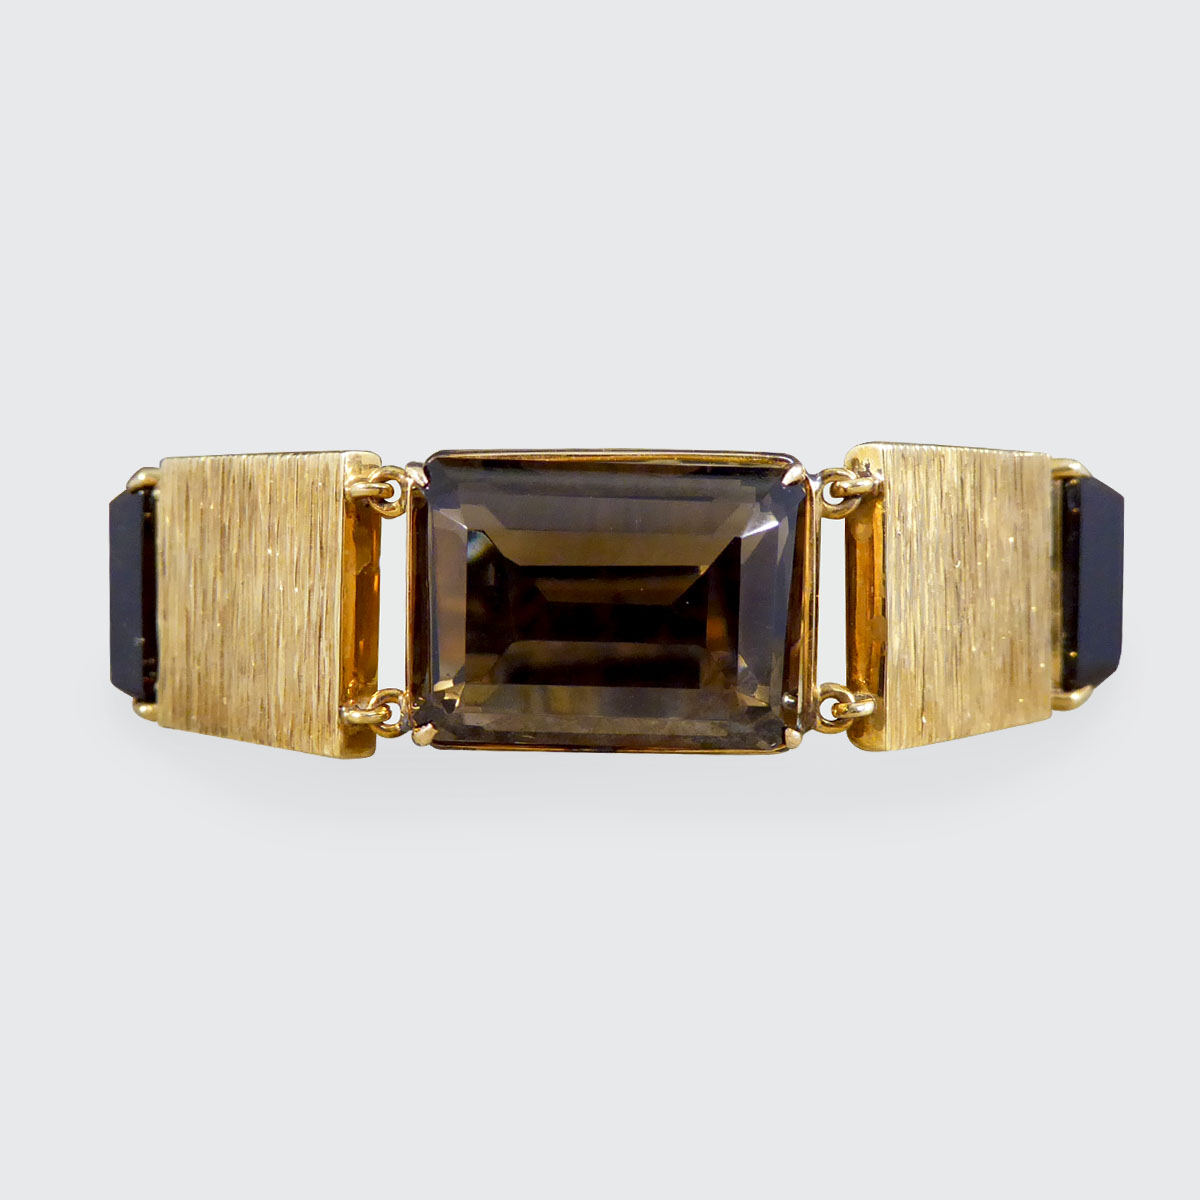 1970's Smokey Quartz Panel Bracelet in 9ct Yellow Gold with Bark Detail